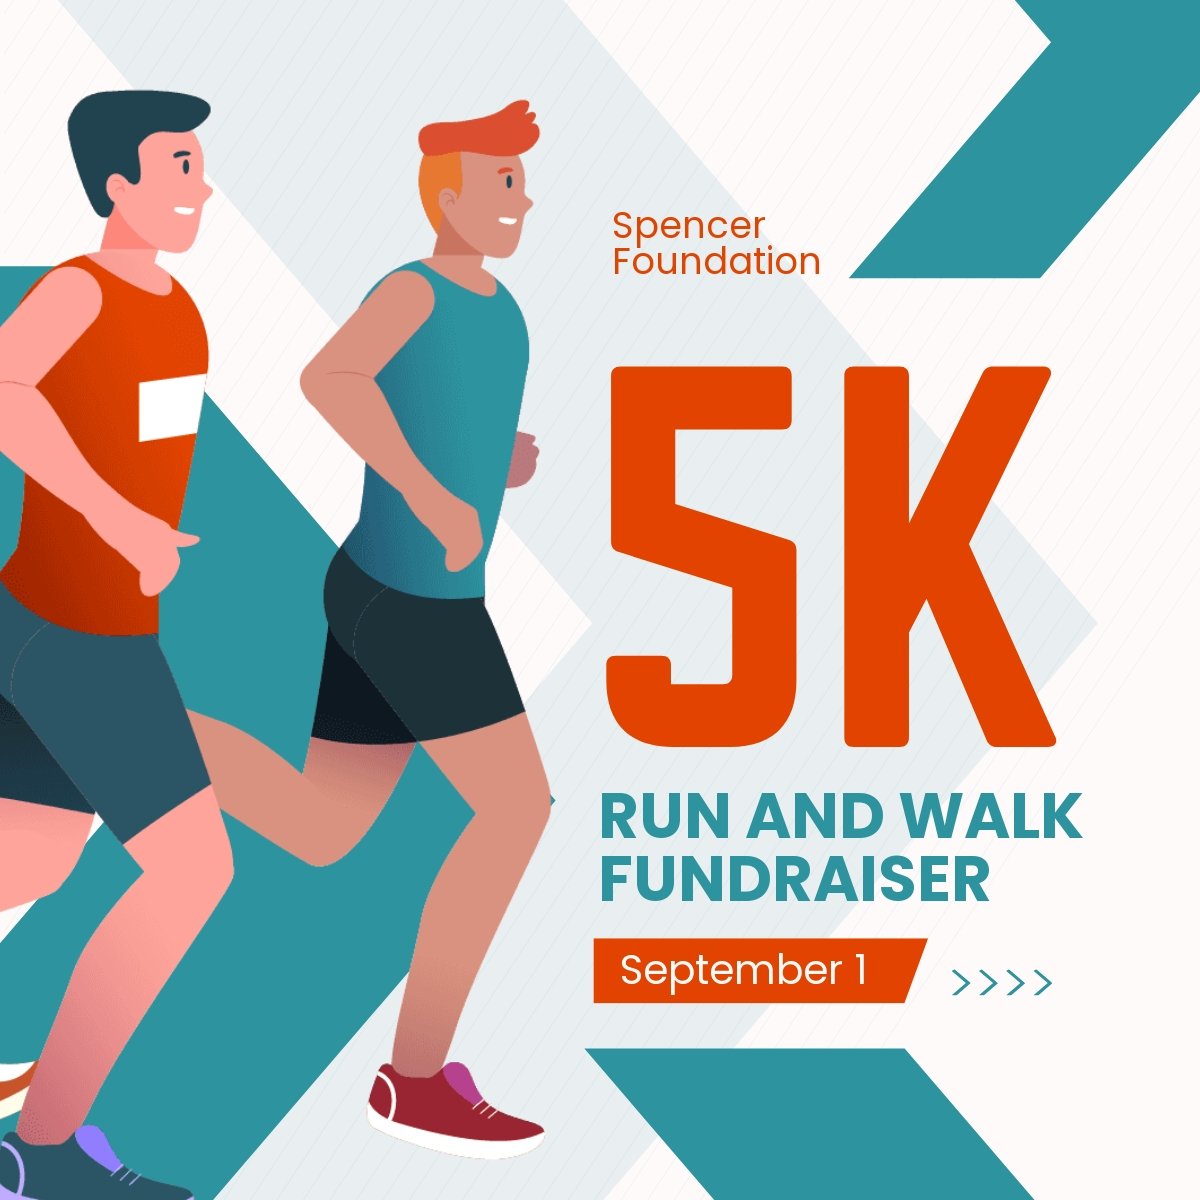 5k Run And Walk Fundraiser Linkedin Post Template